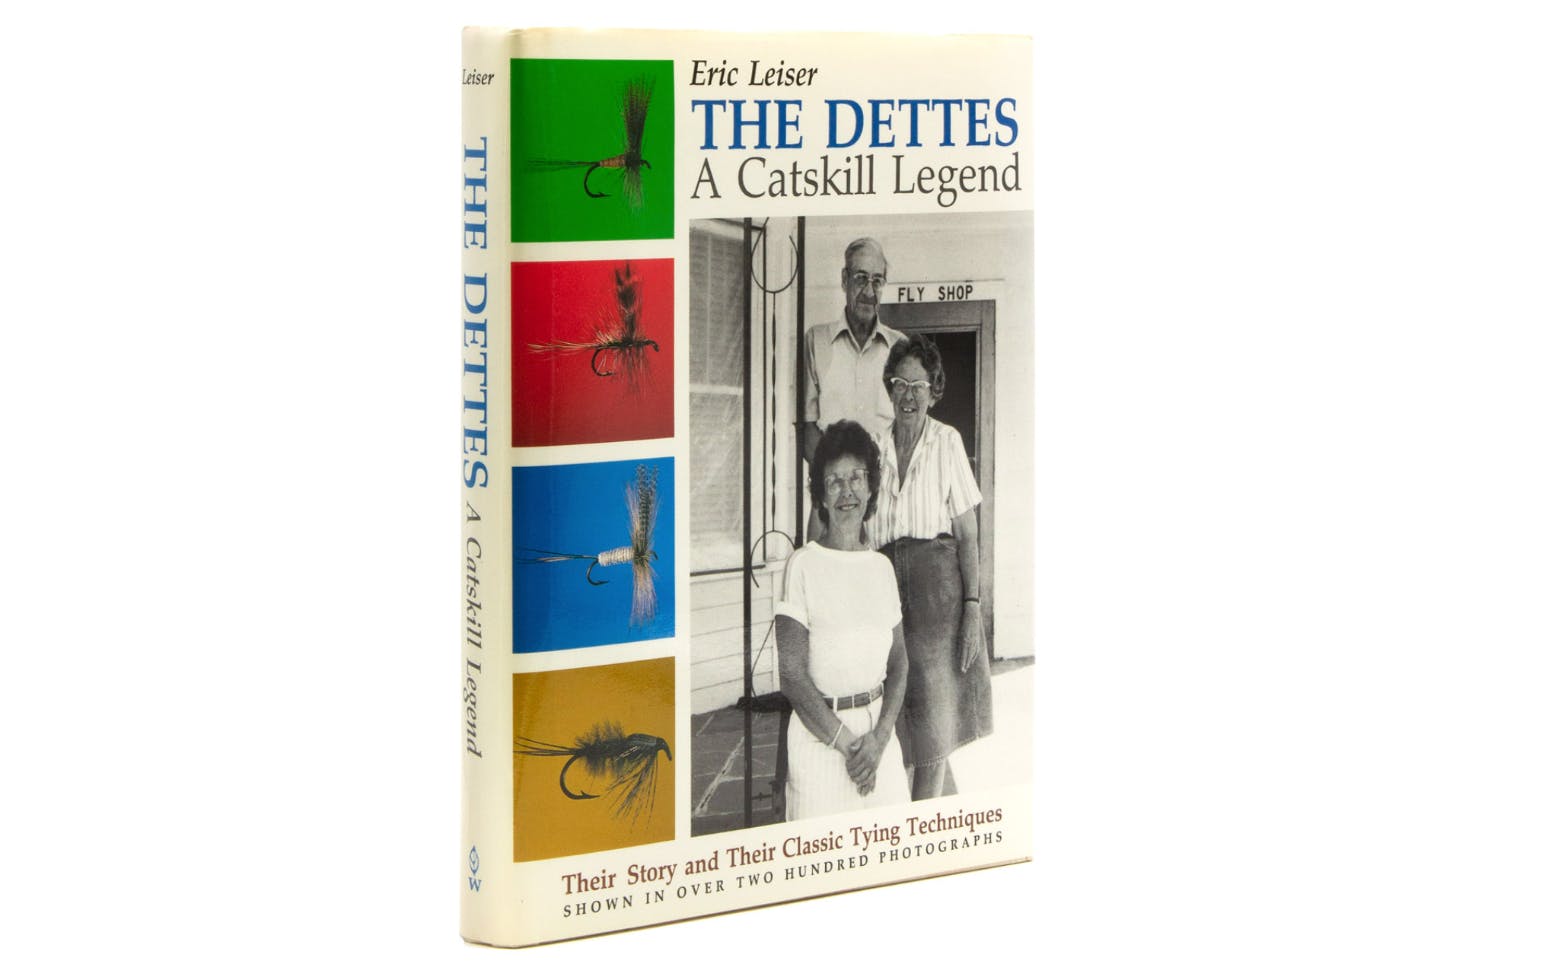 A book called "The Dettes, a Catskill Legend".